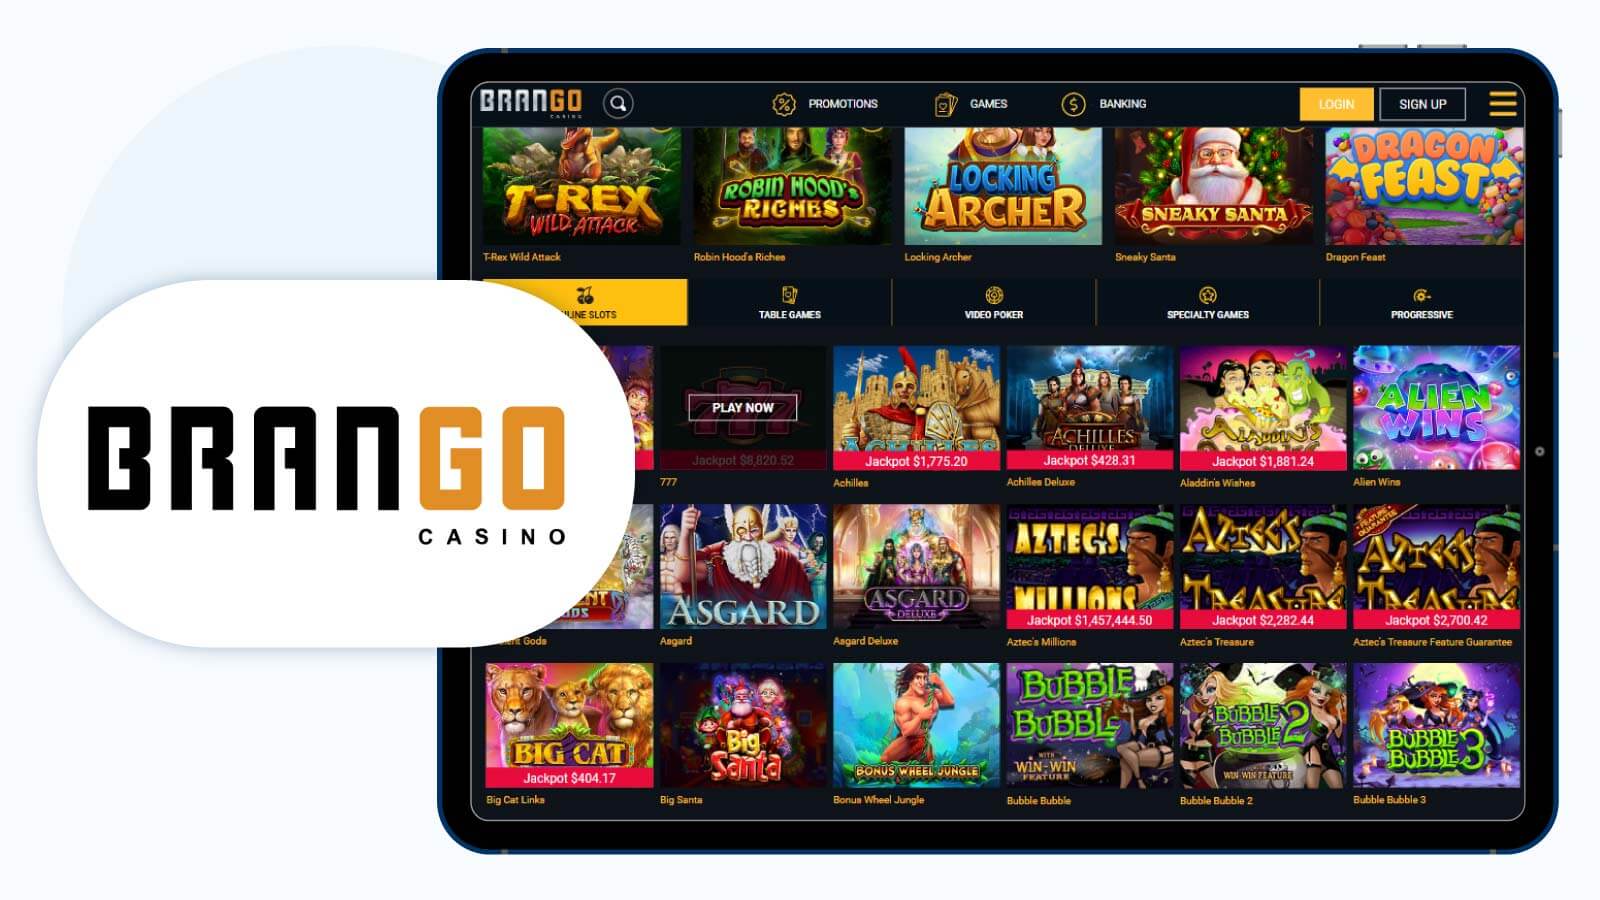 Brango-Casino-Best-$10-Free-No-Deposit-Bonus-Casino